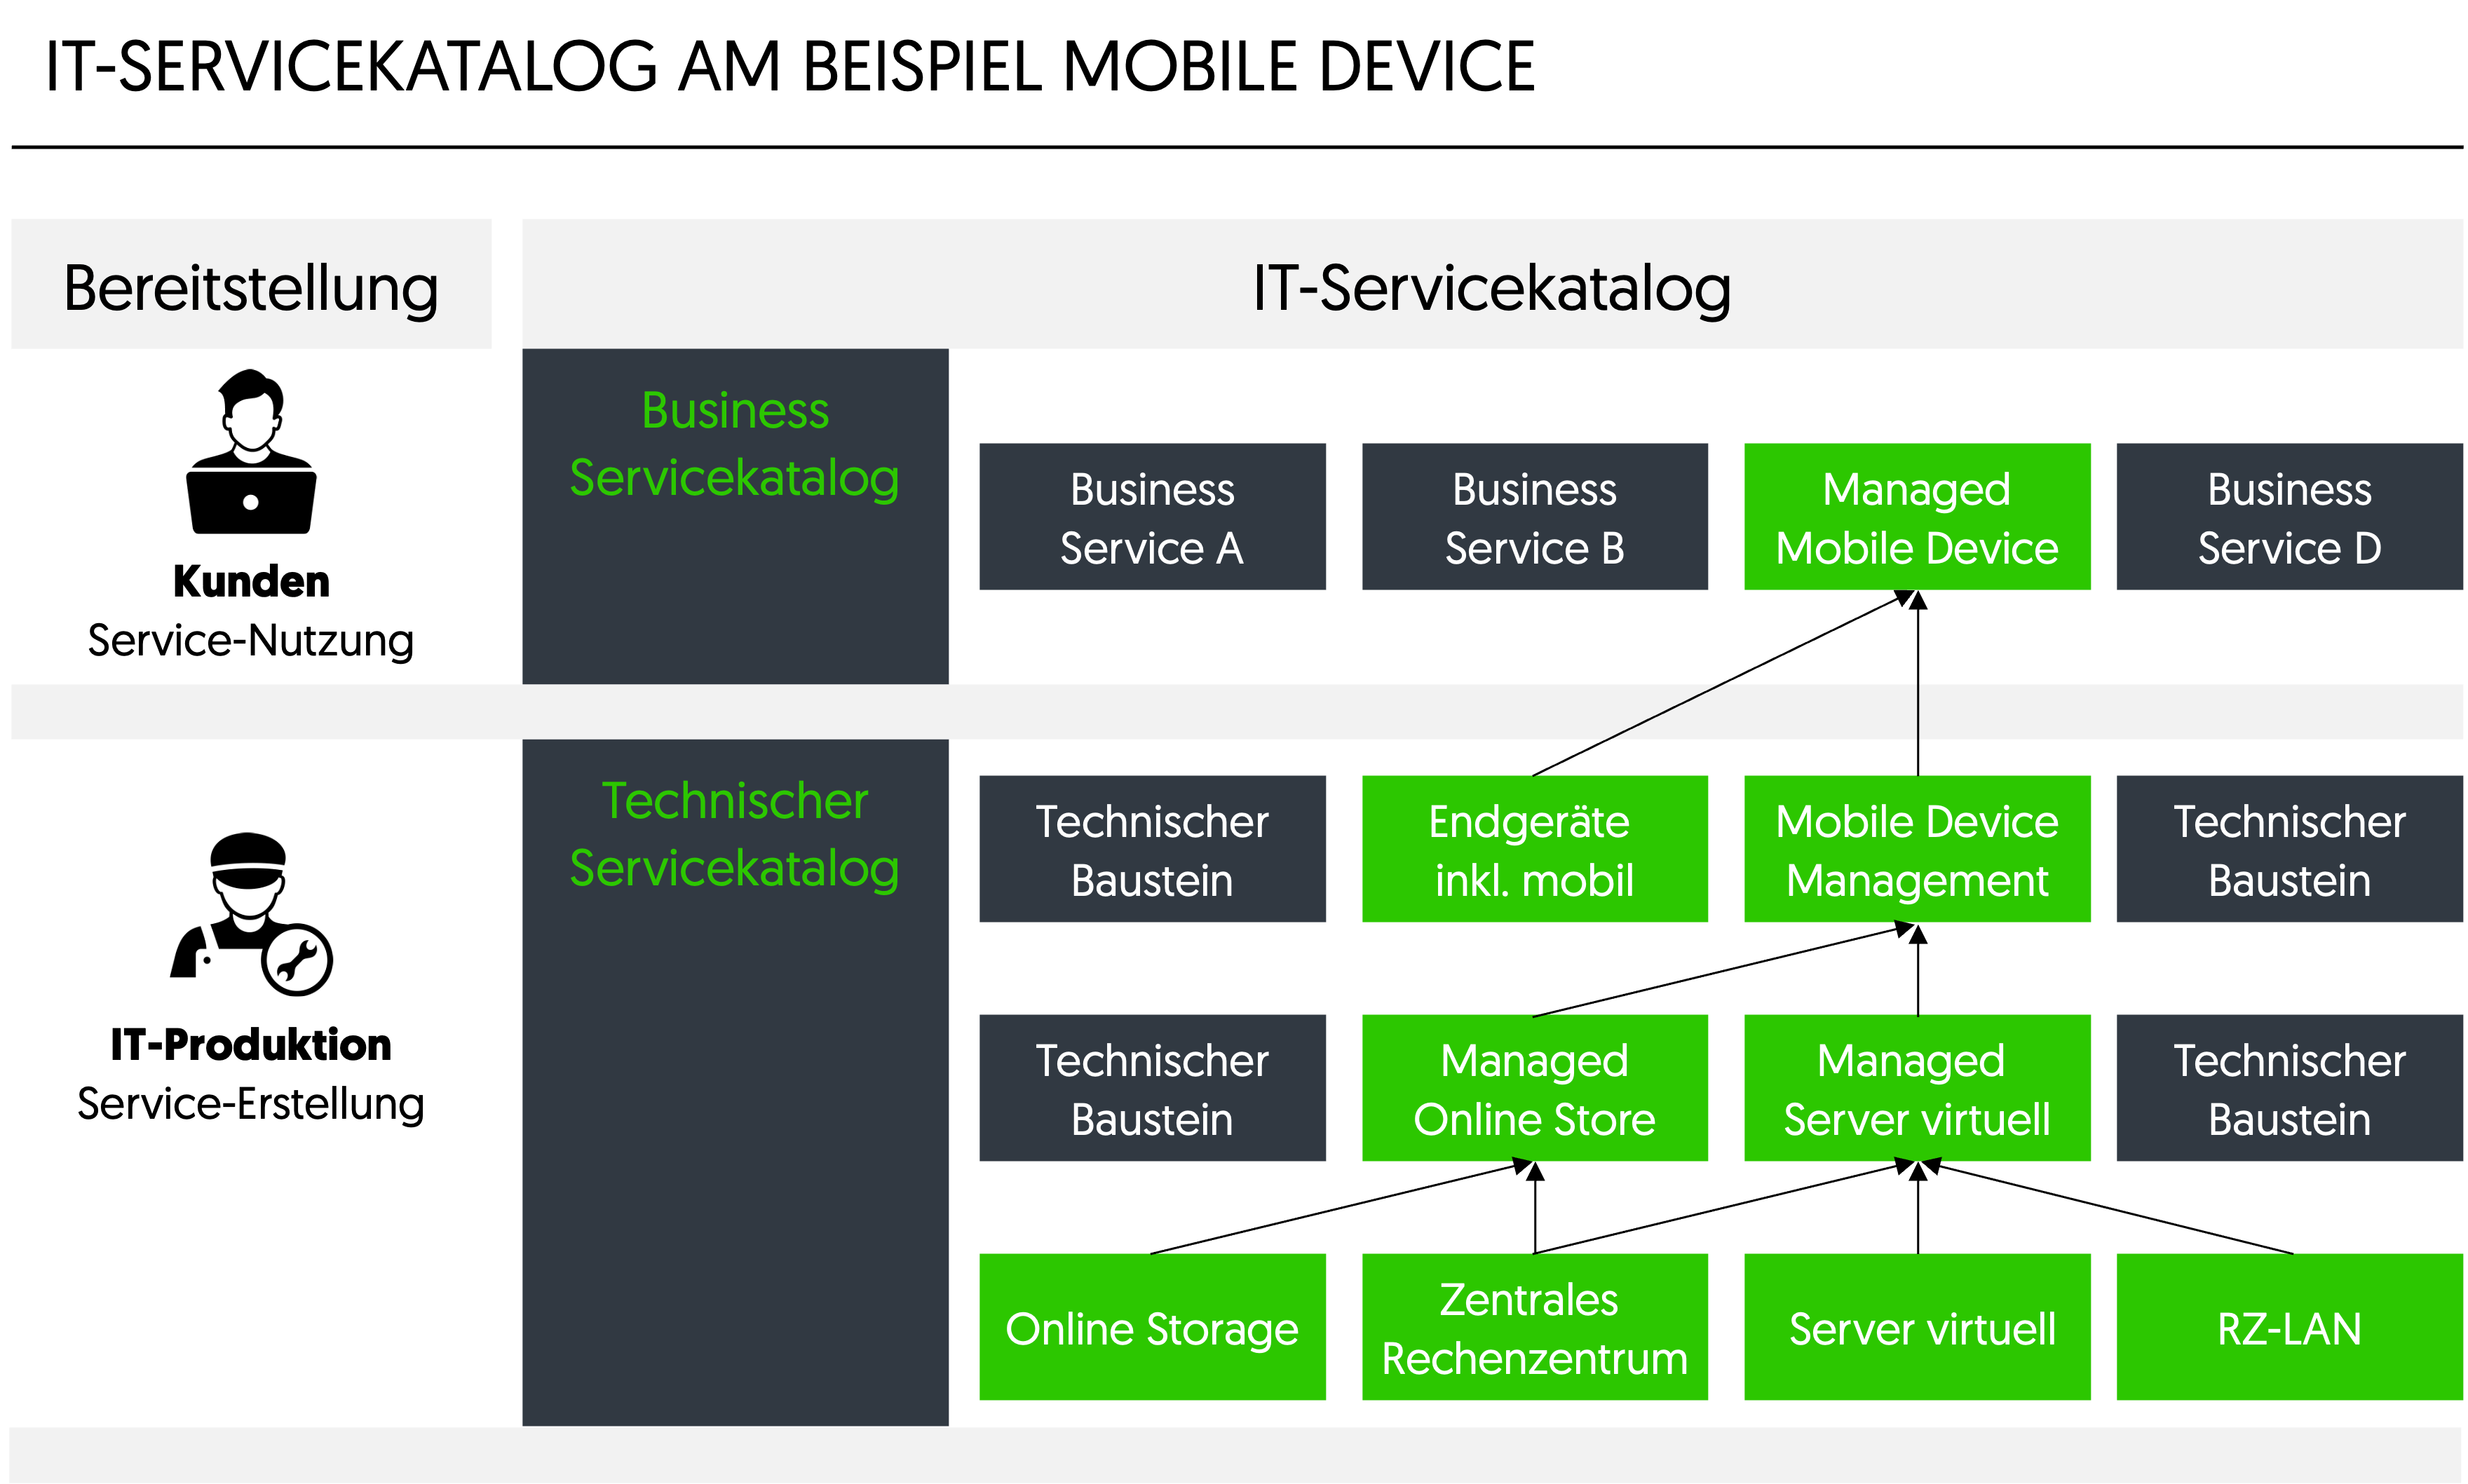 IT-Servicekatalog am Beispiel Mobile Device